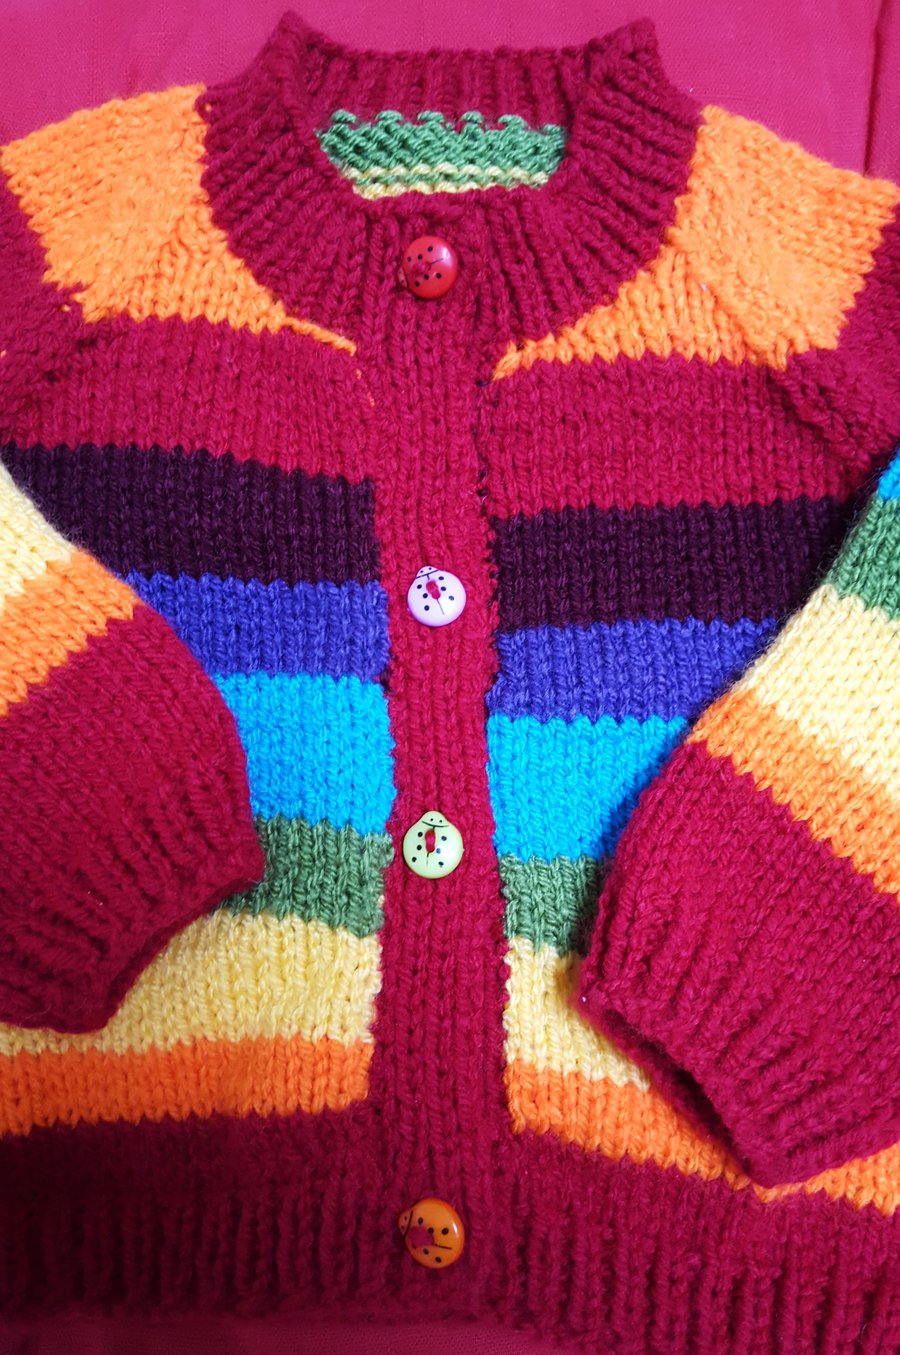 Rainbow Hand knitted Baby Cardigan